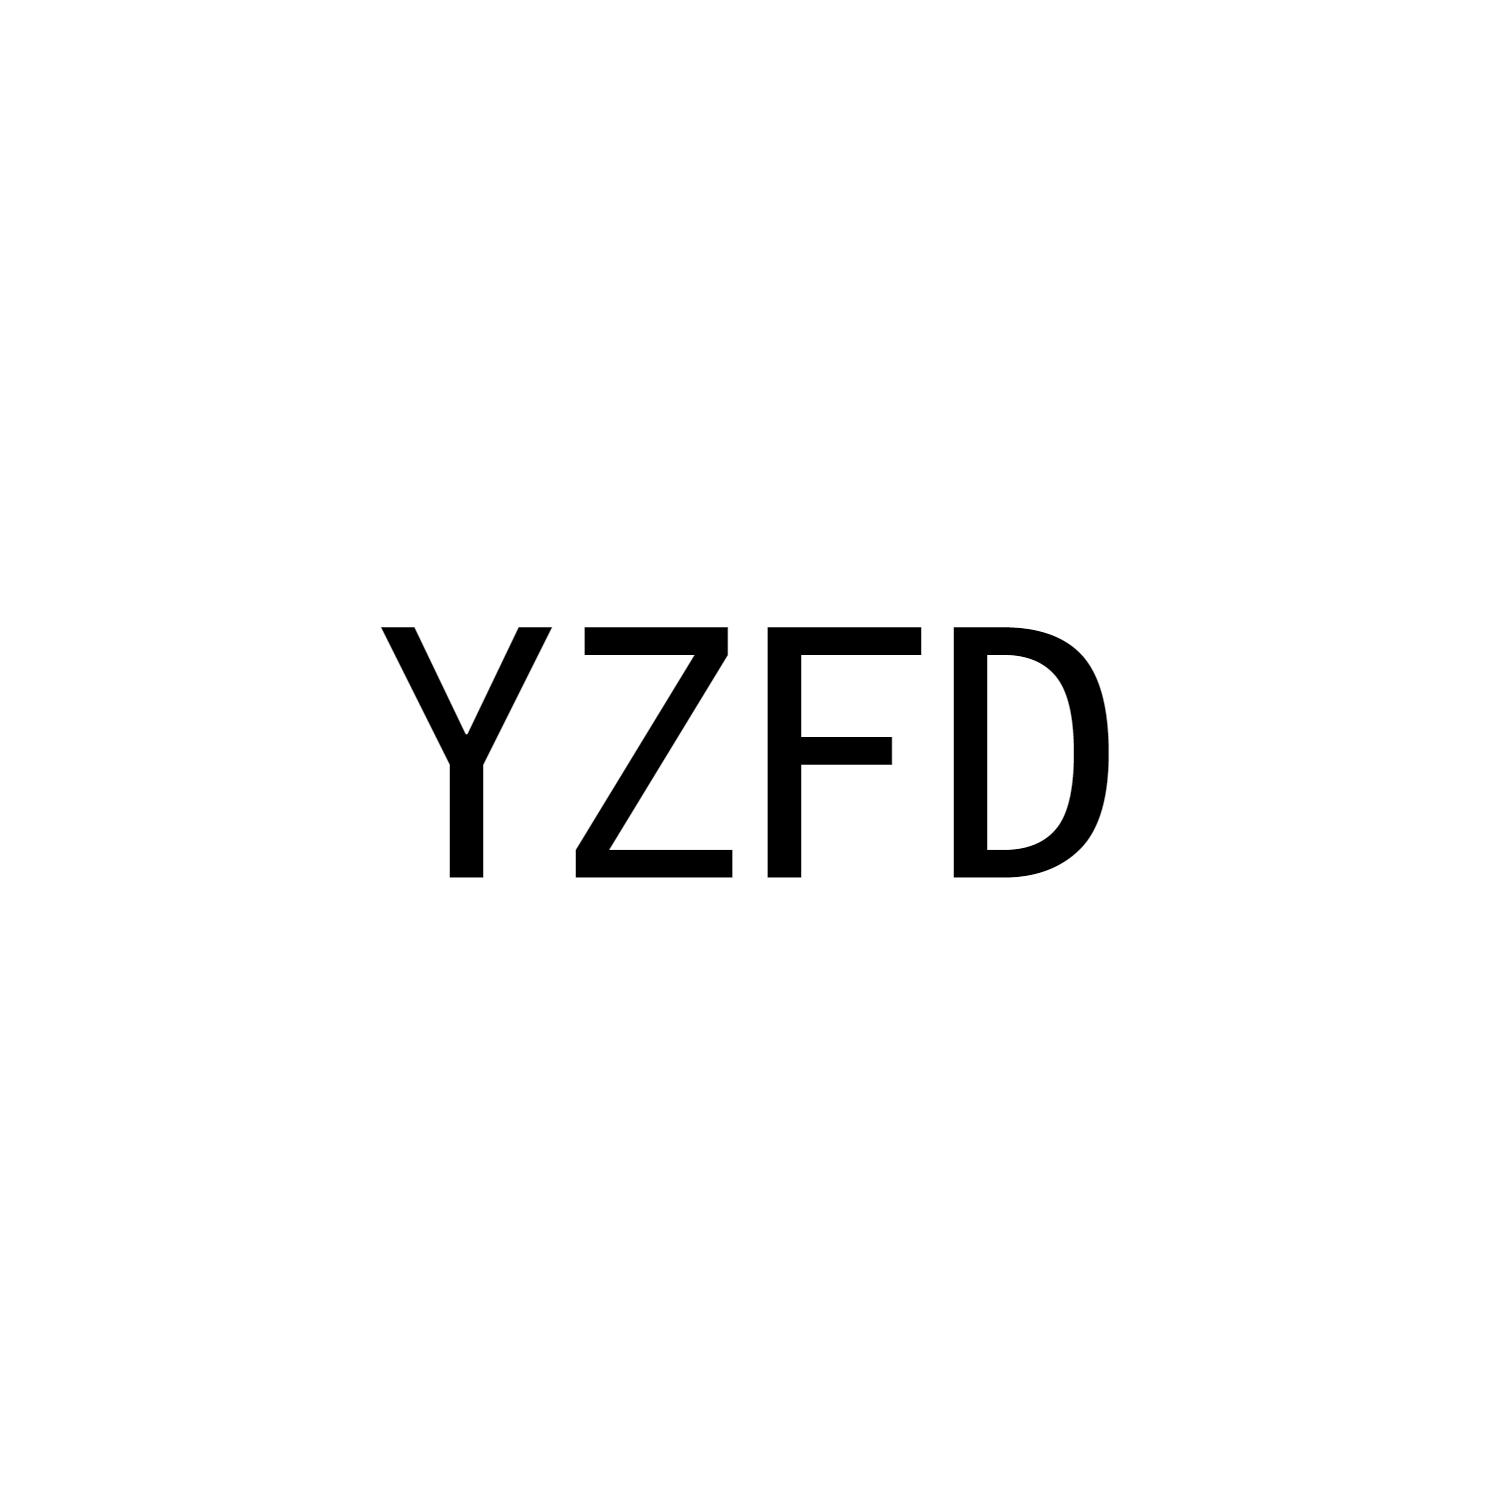 YZFD